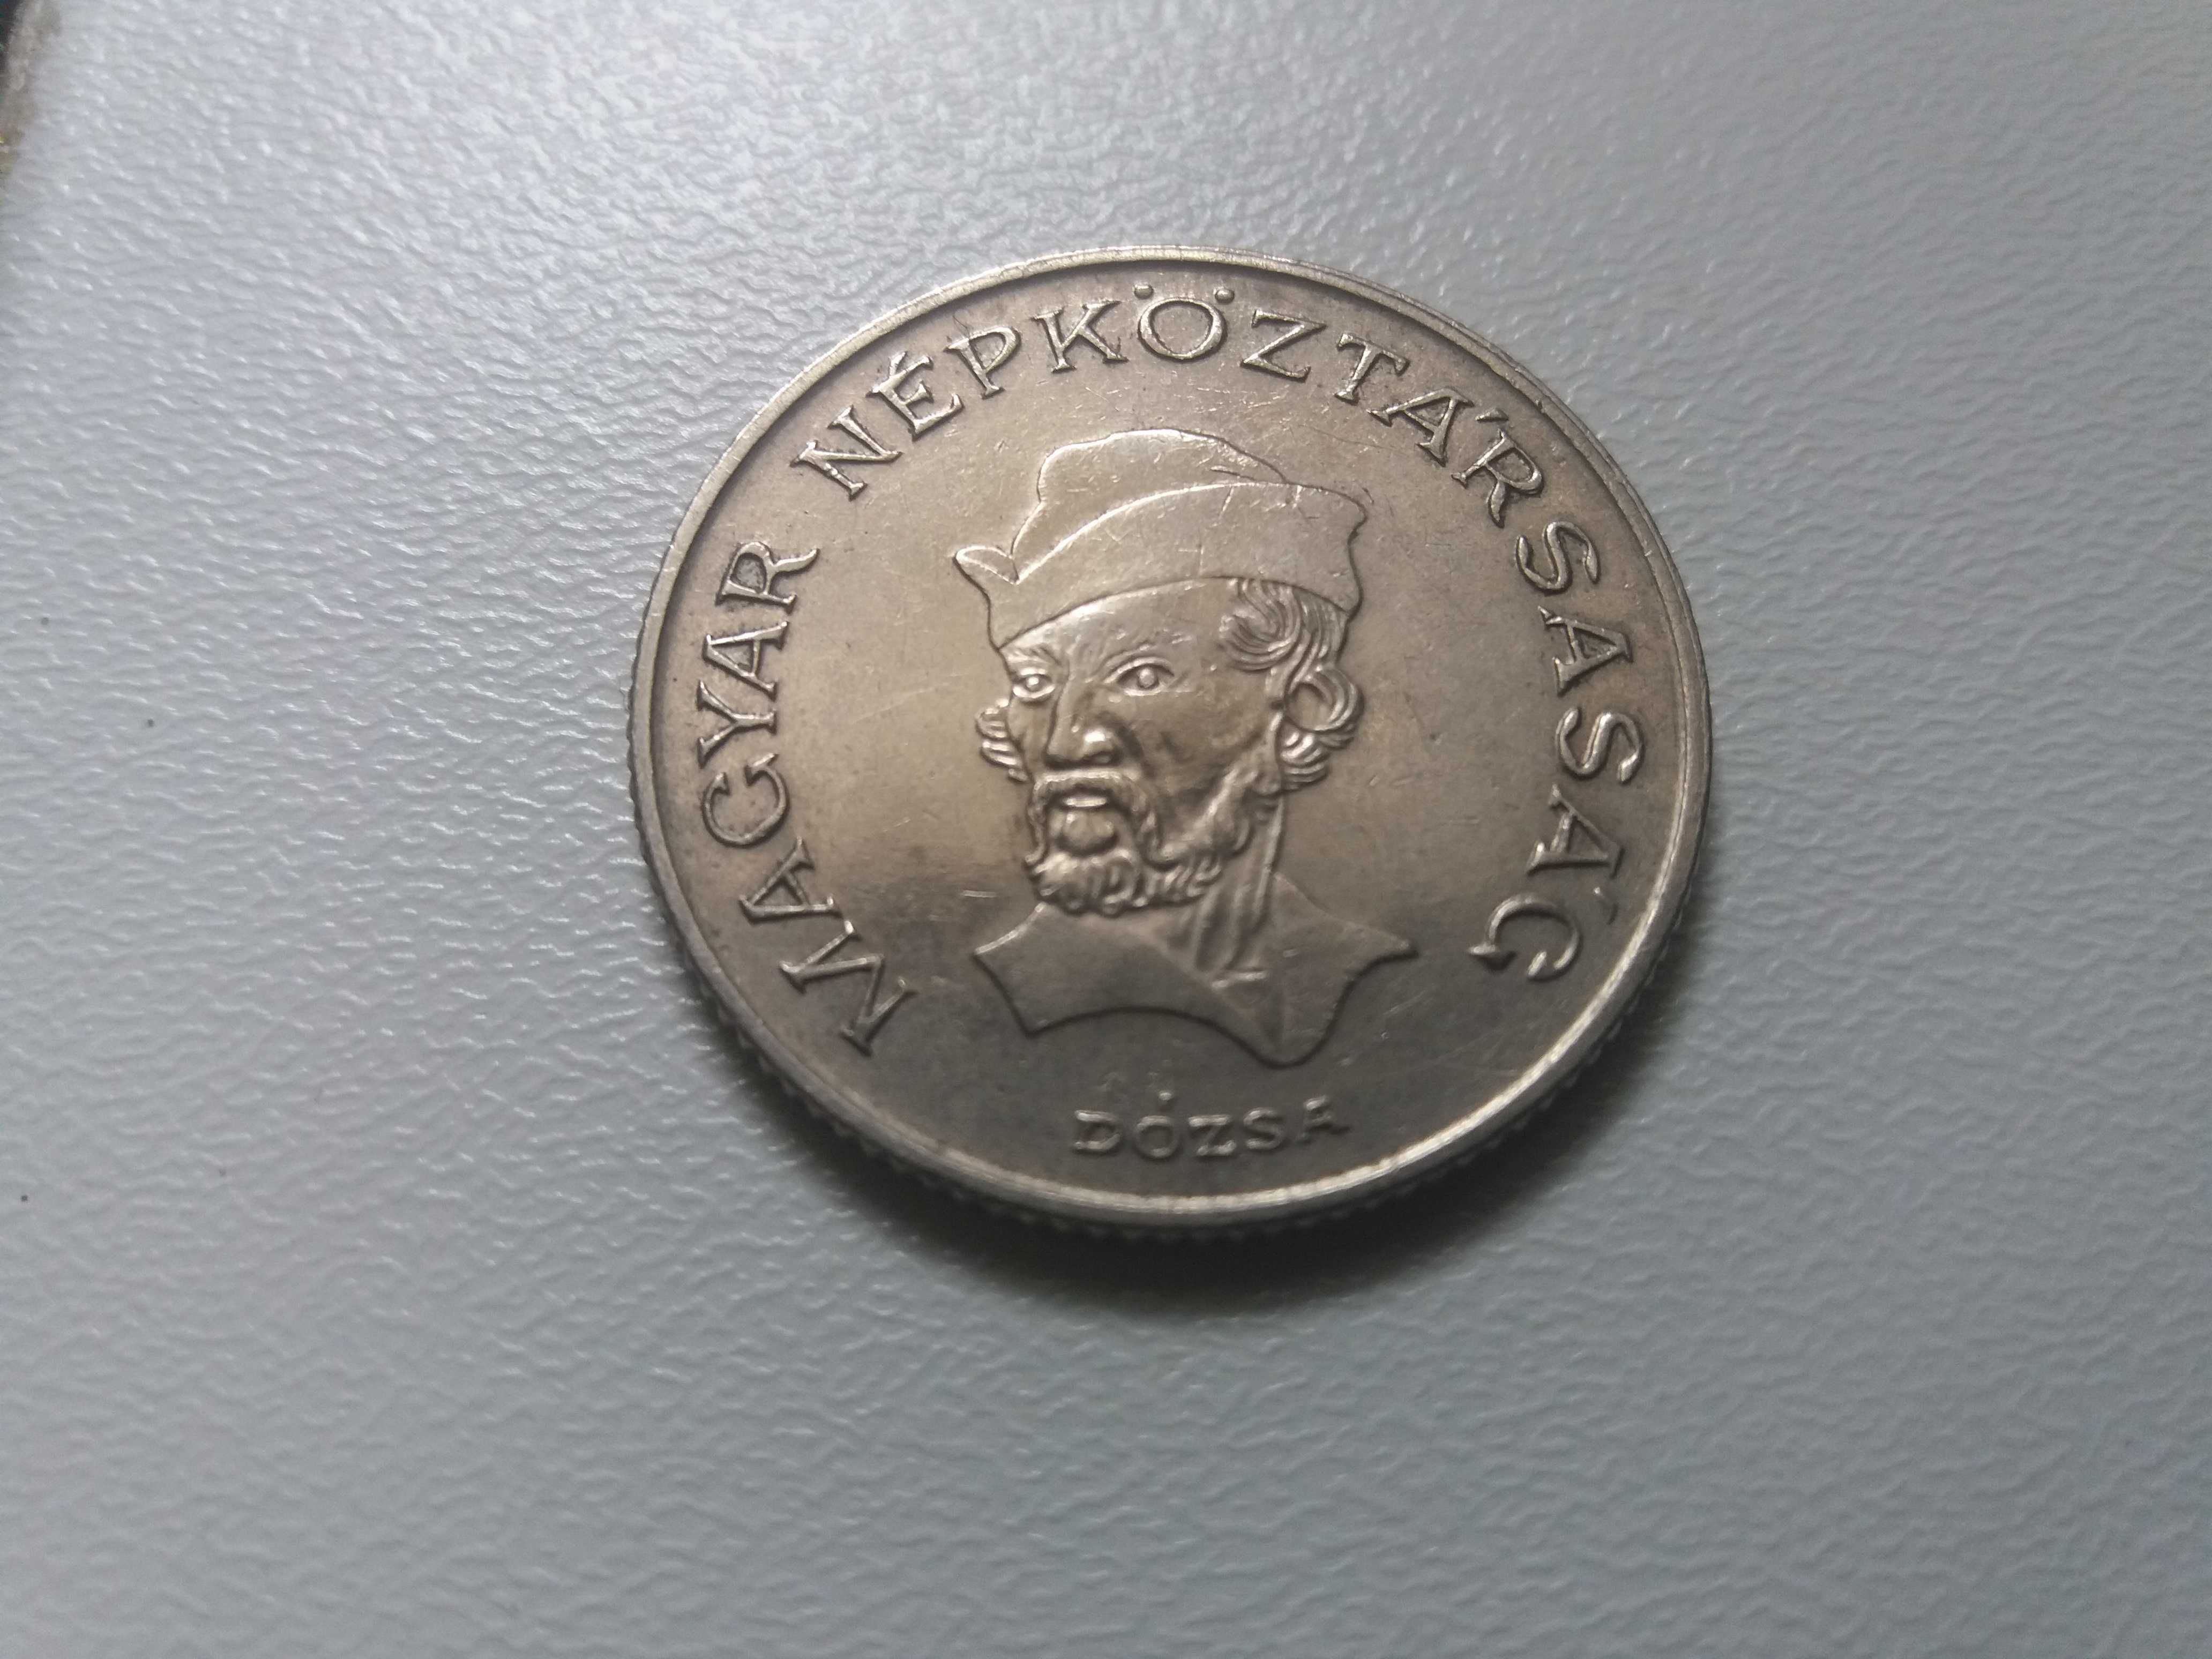 Moneta Węgry 20 Forint.1982, Budapest